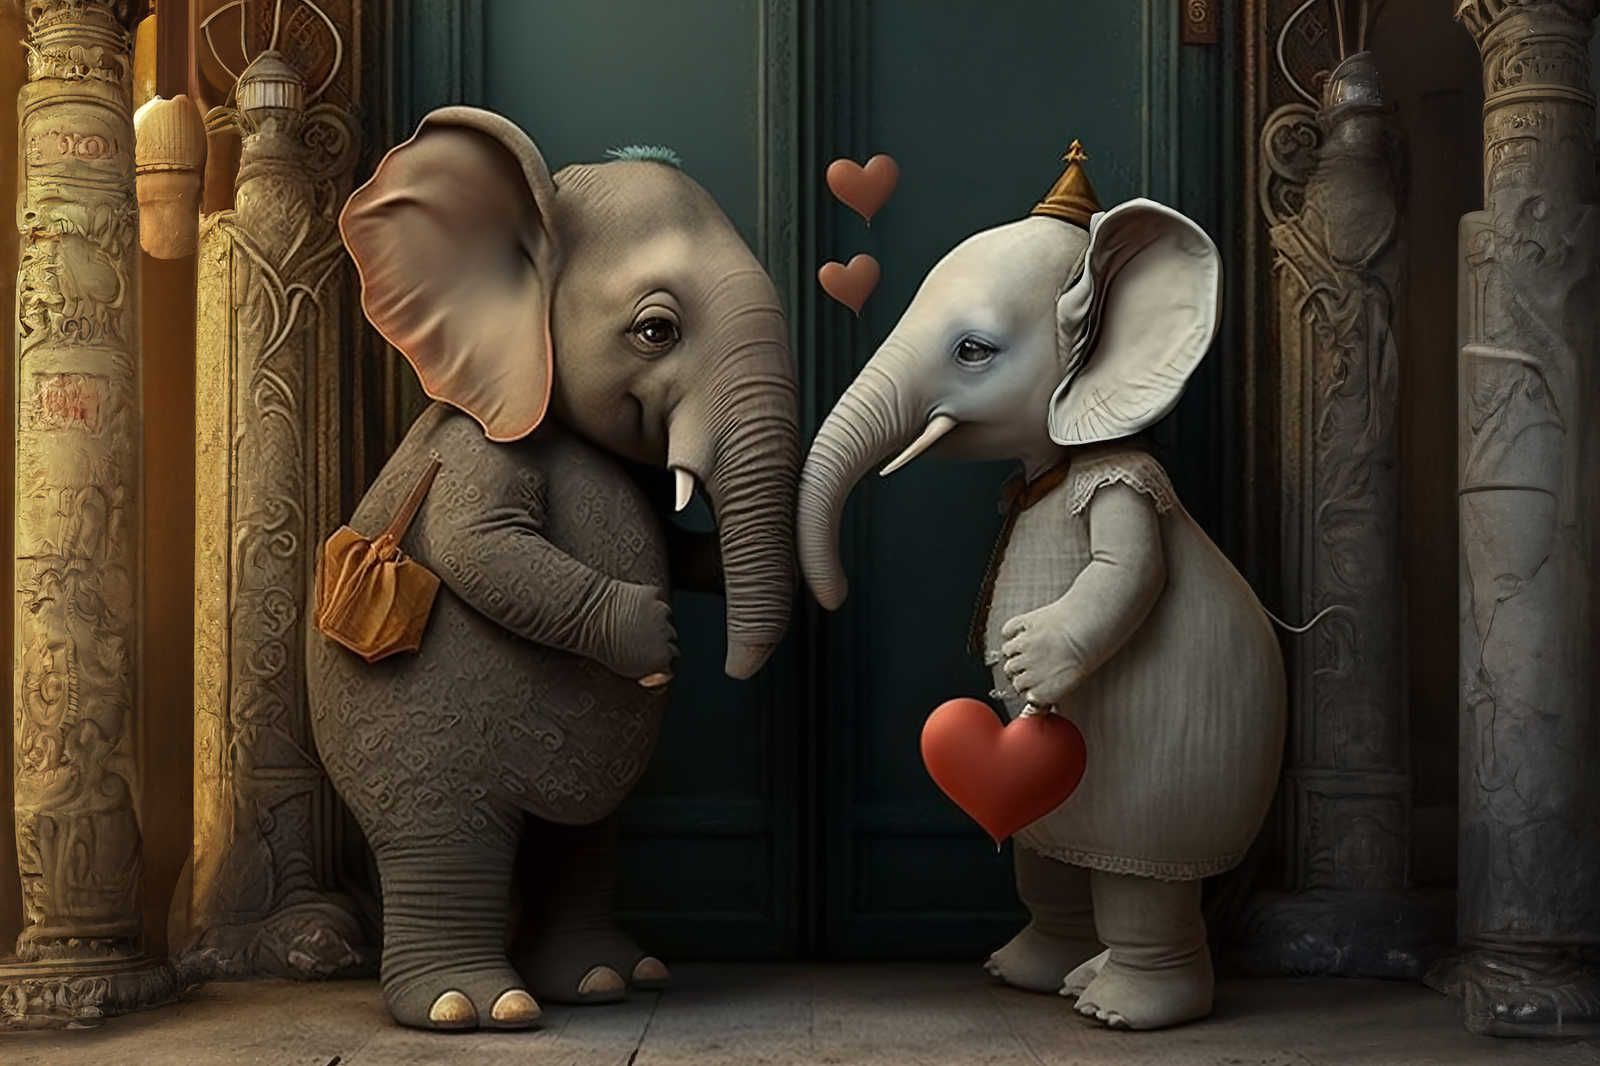             Toile KI »elephant love« - 90 cm x 60 cm
        